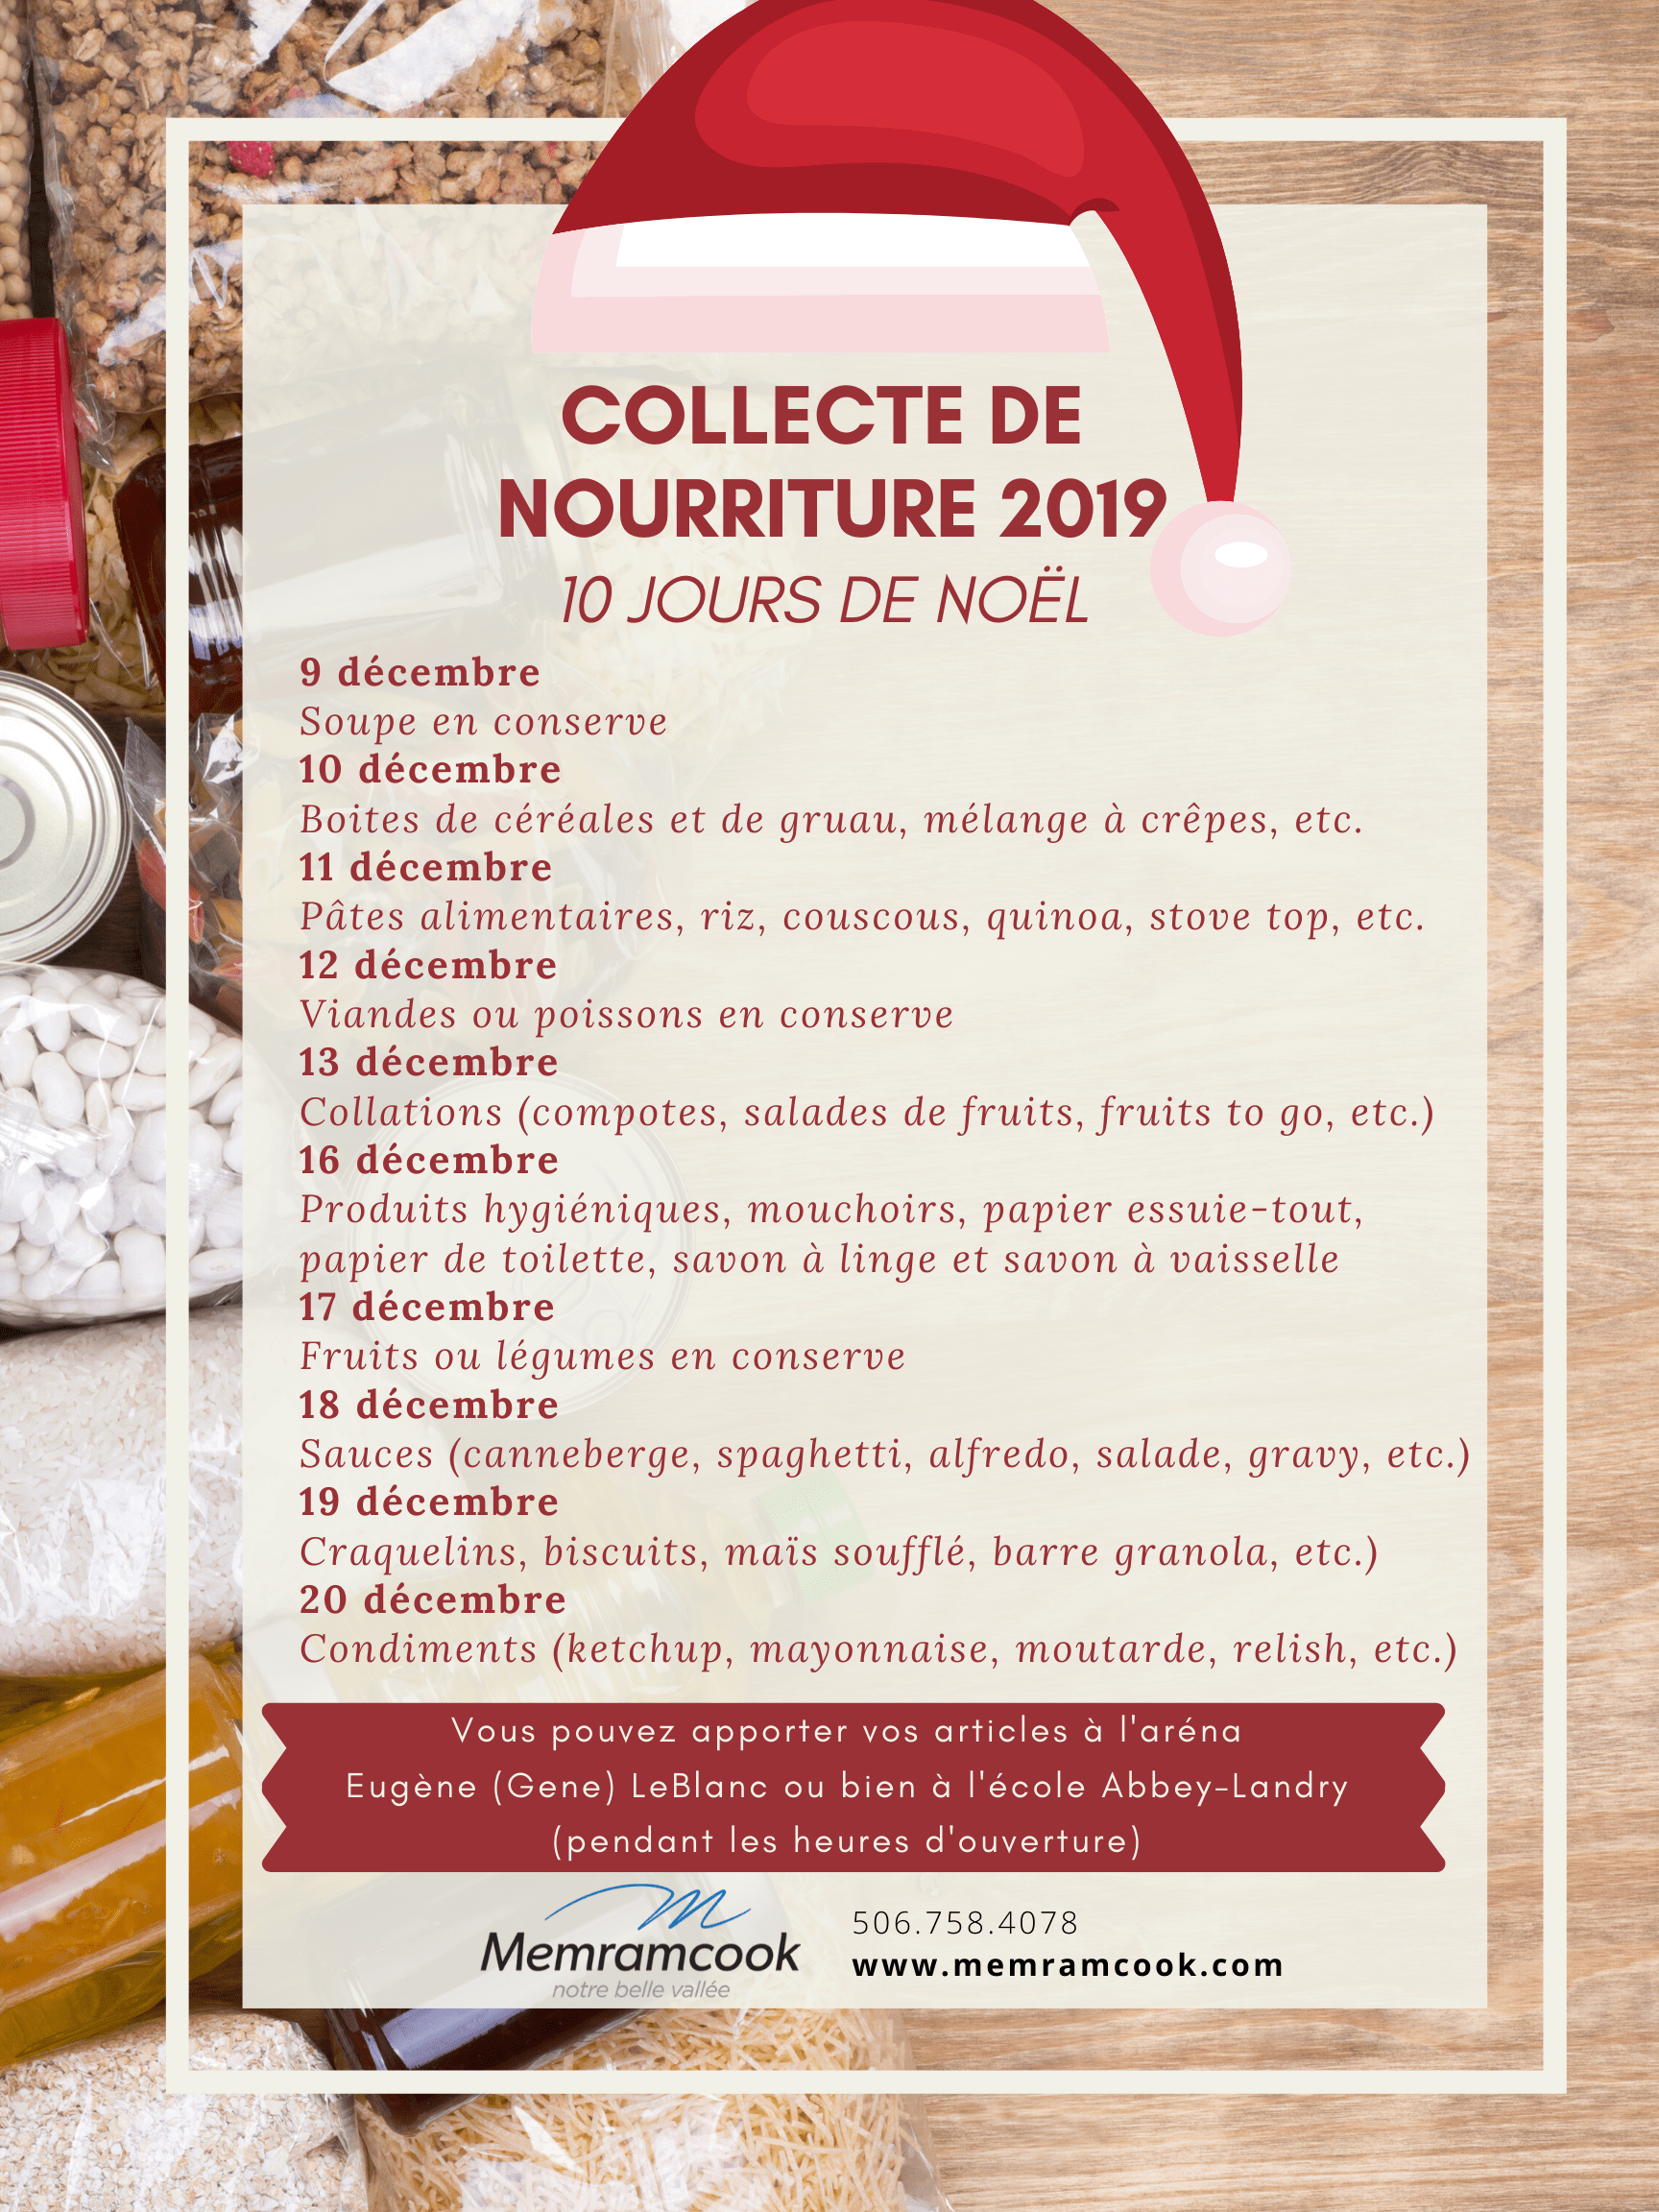 Collecte_de_nourriture_2019_1.png